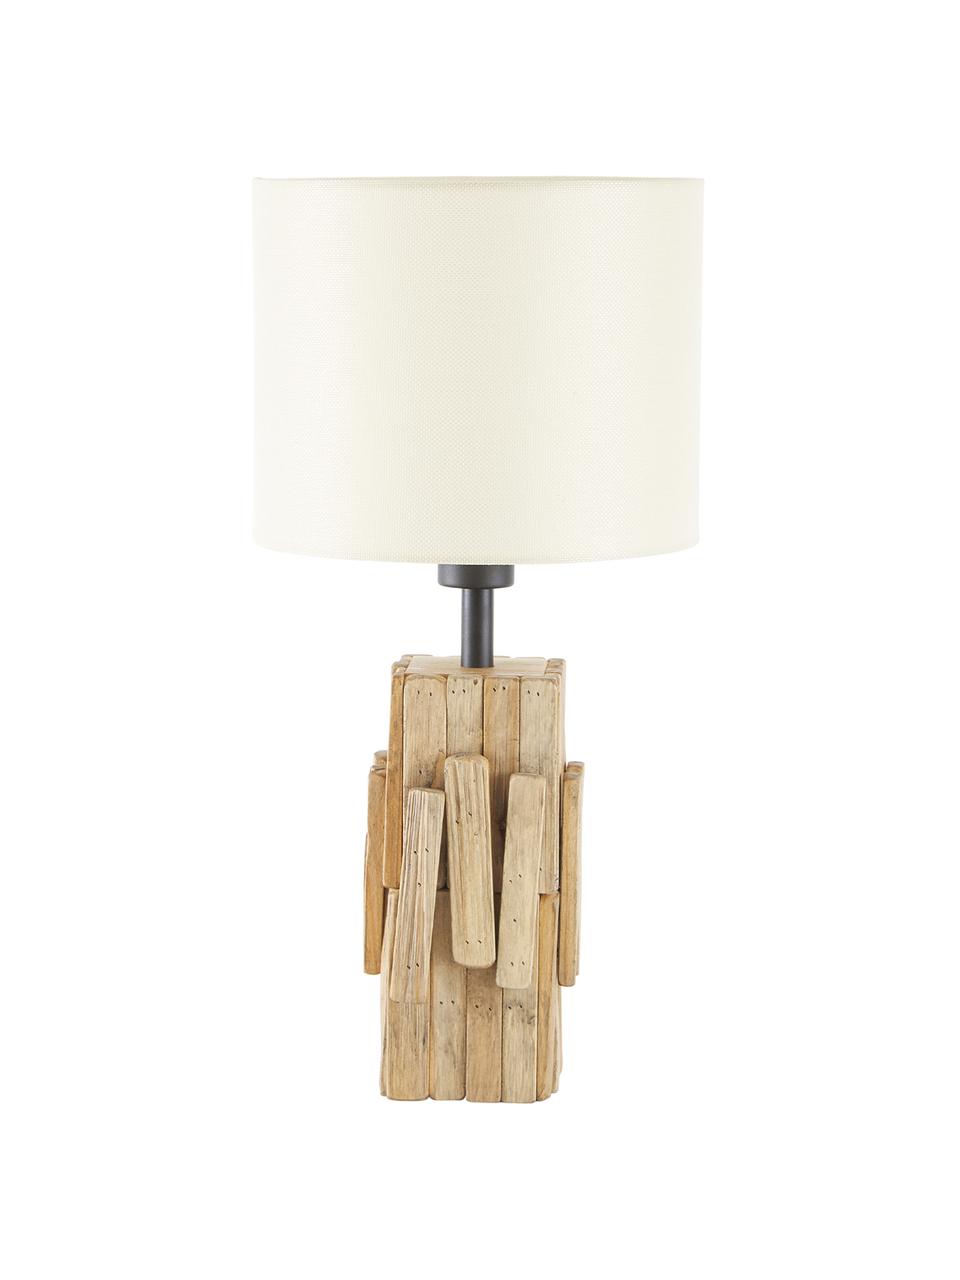 Tafellamp Portishead met houten voet, Lampenkap: linnen, Lampvoet: hout, Bruin, wit, Ø 26 x H 54 cm